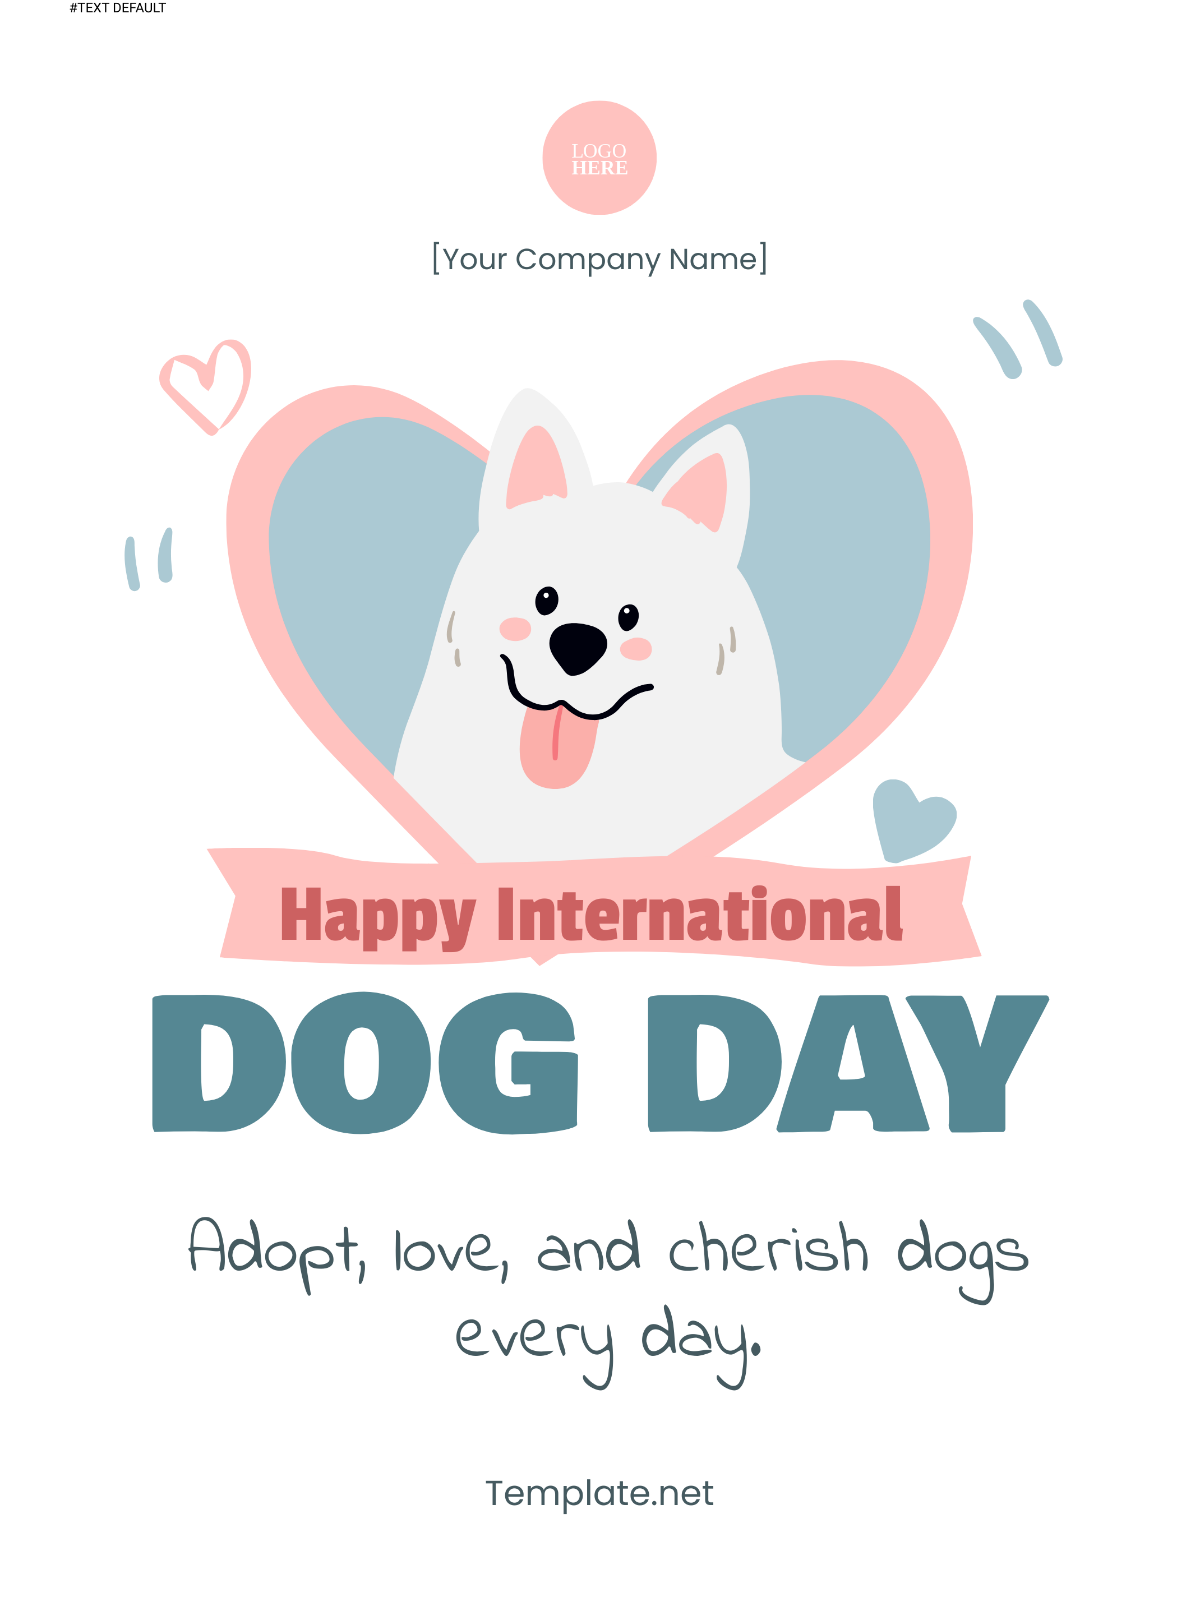 Happy International Dog Day Social Media